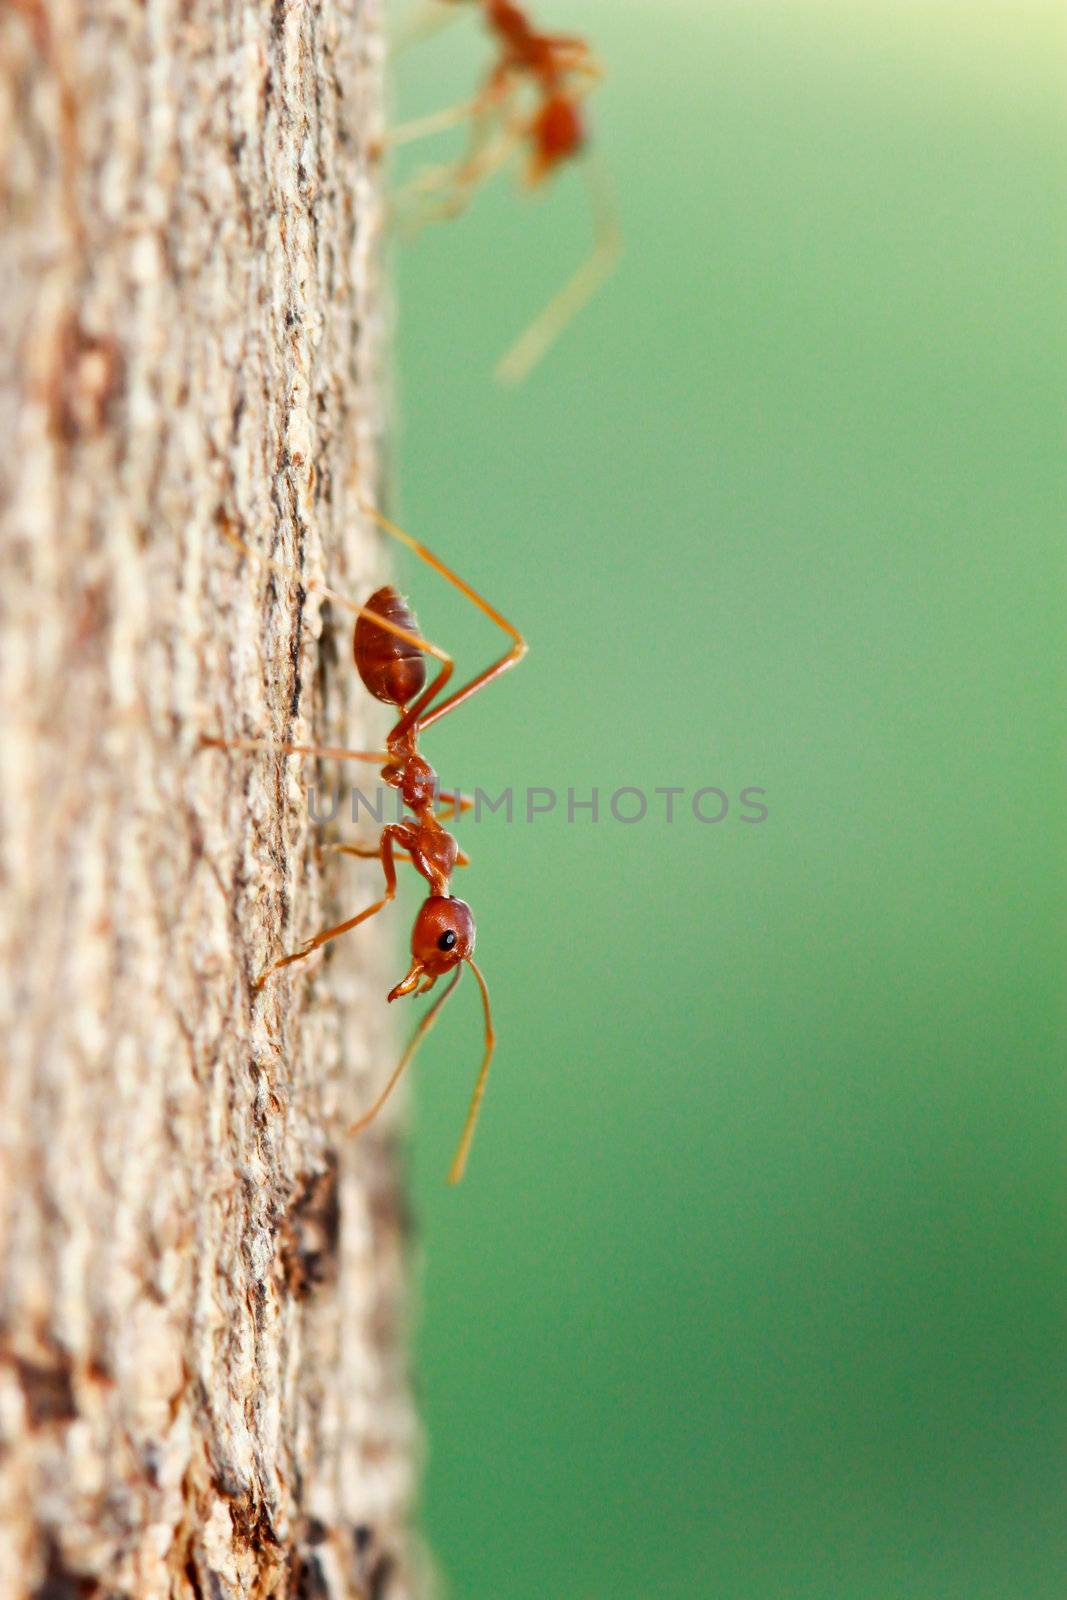 Ant on tree by bajita111122